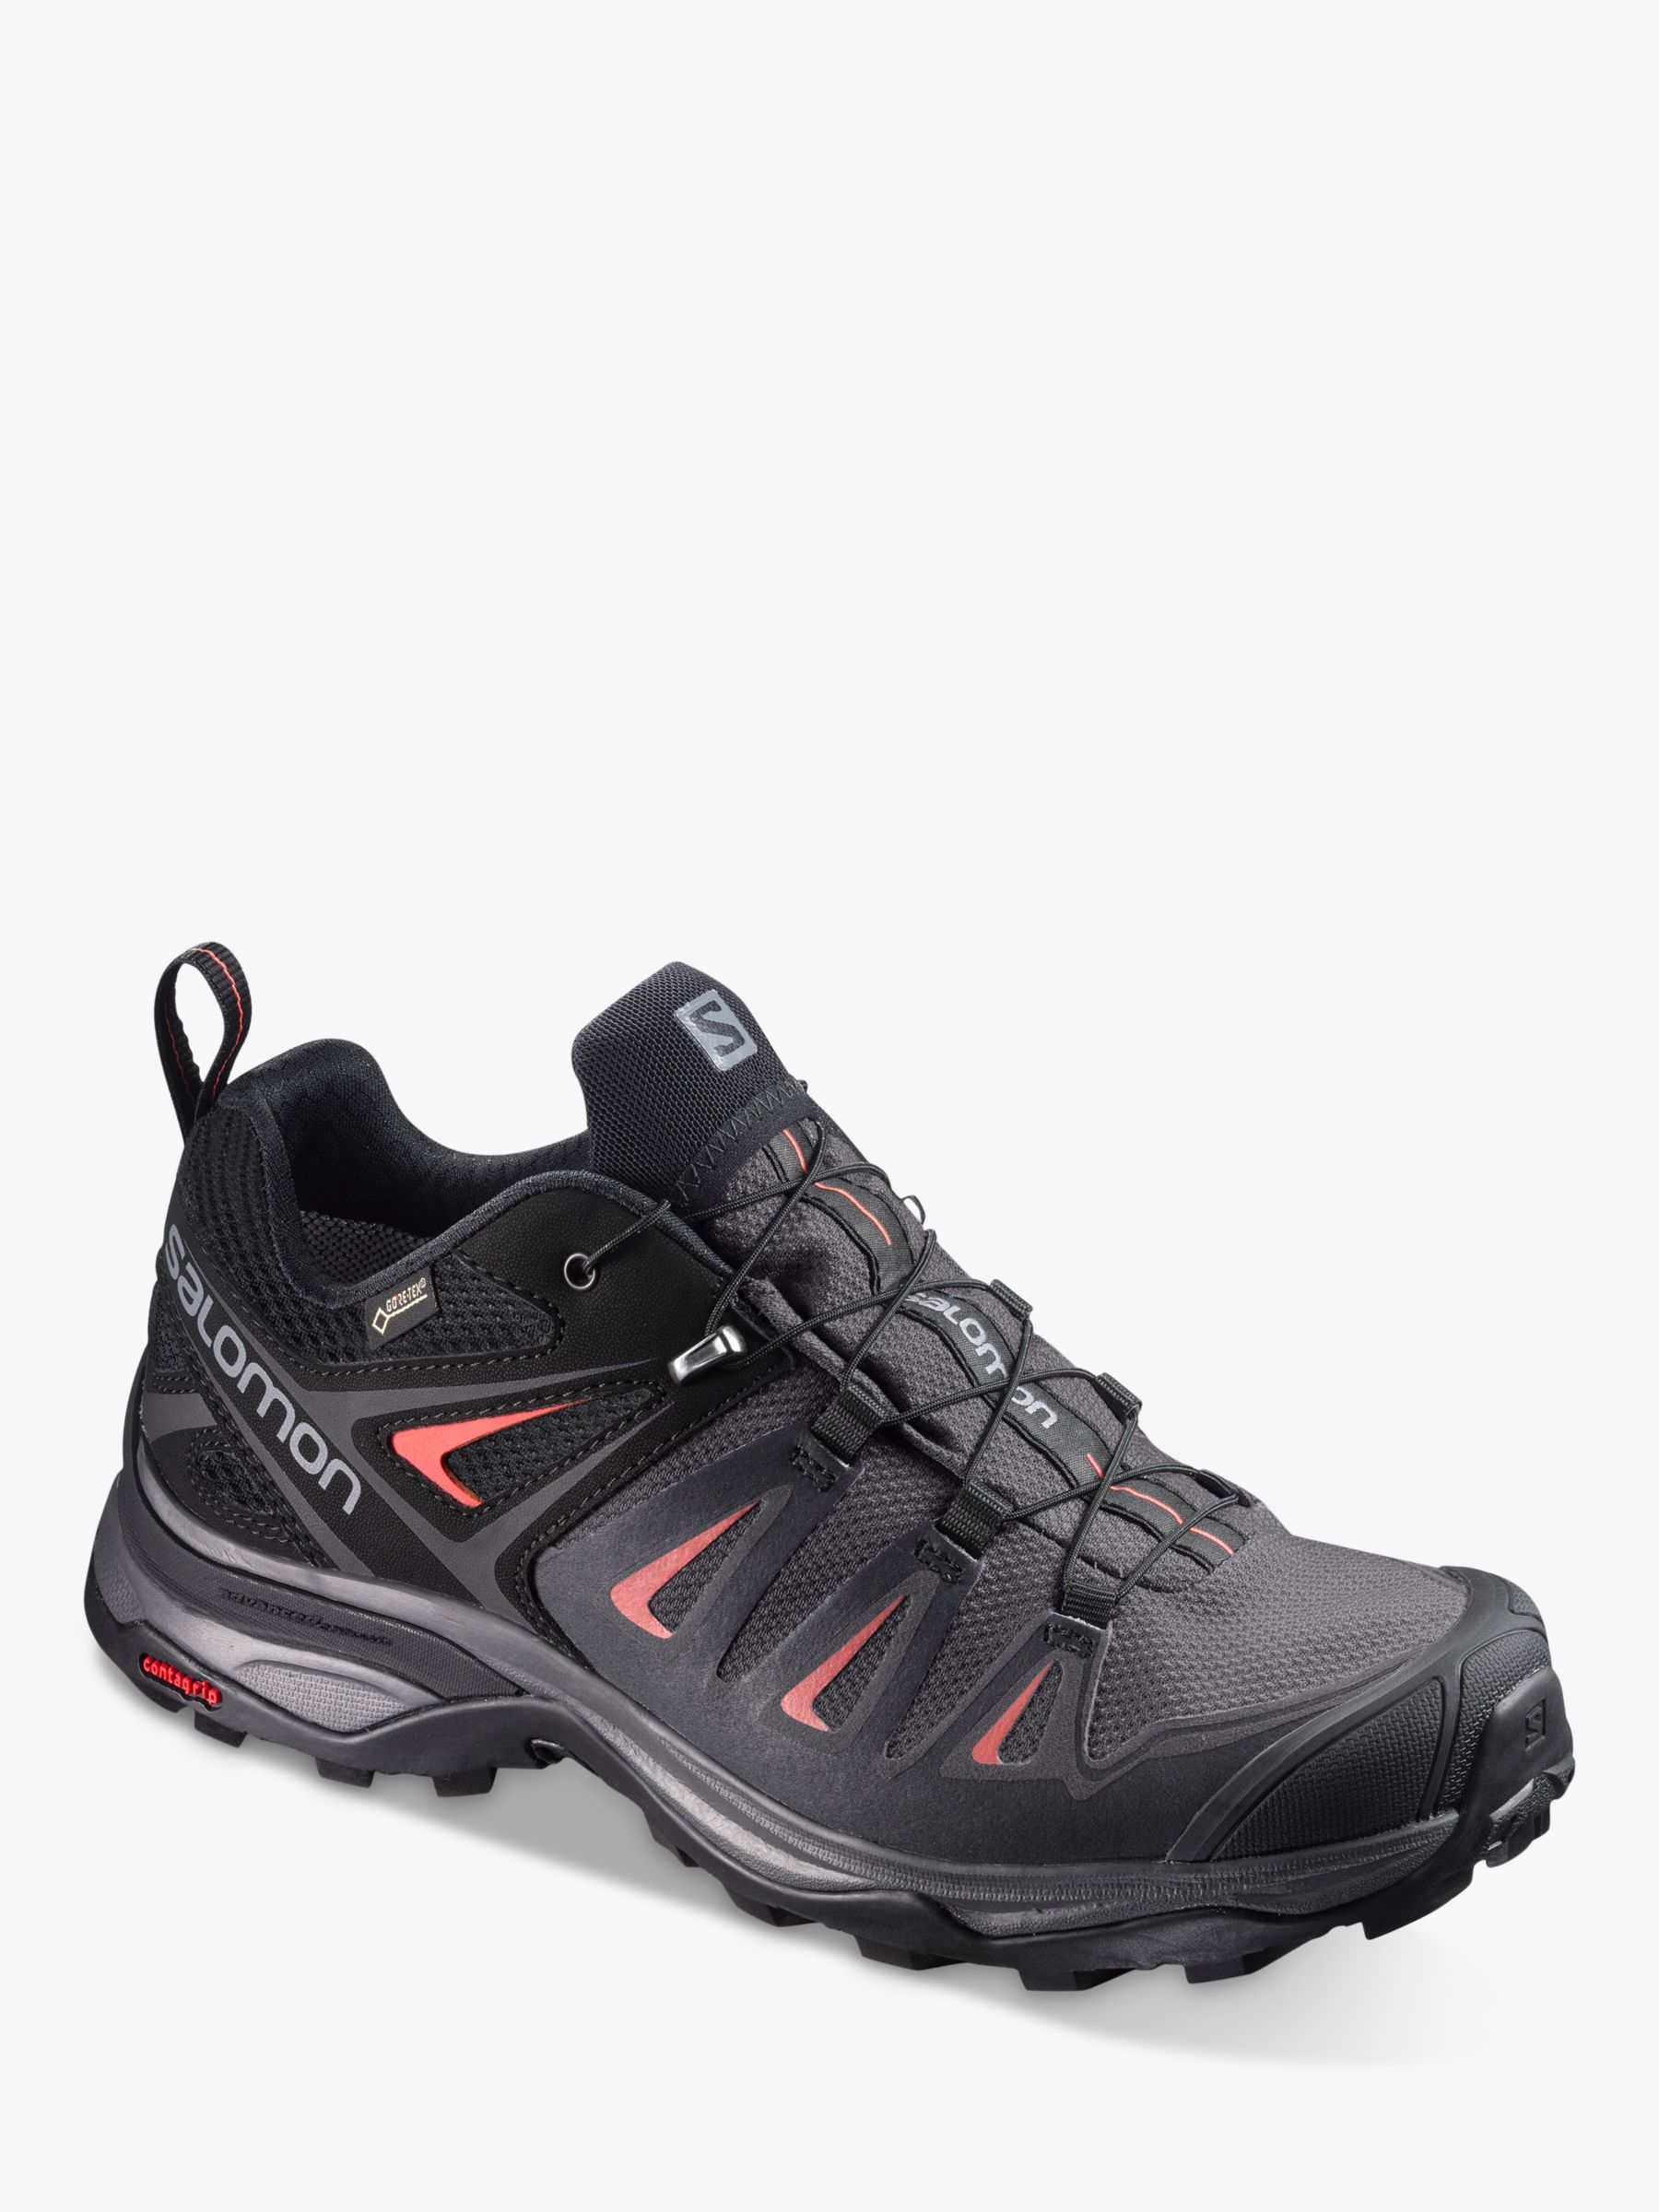 Salomon X Ultra 3 Women's Waterproof Gore-Tex Hiking Shoes at John Lewis & Partners